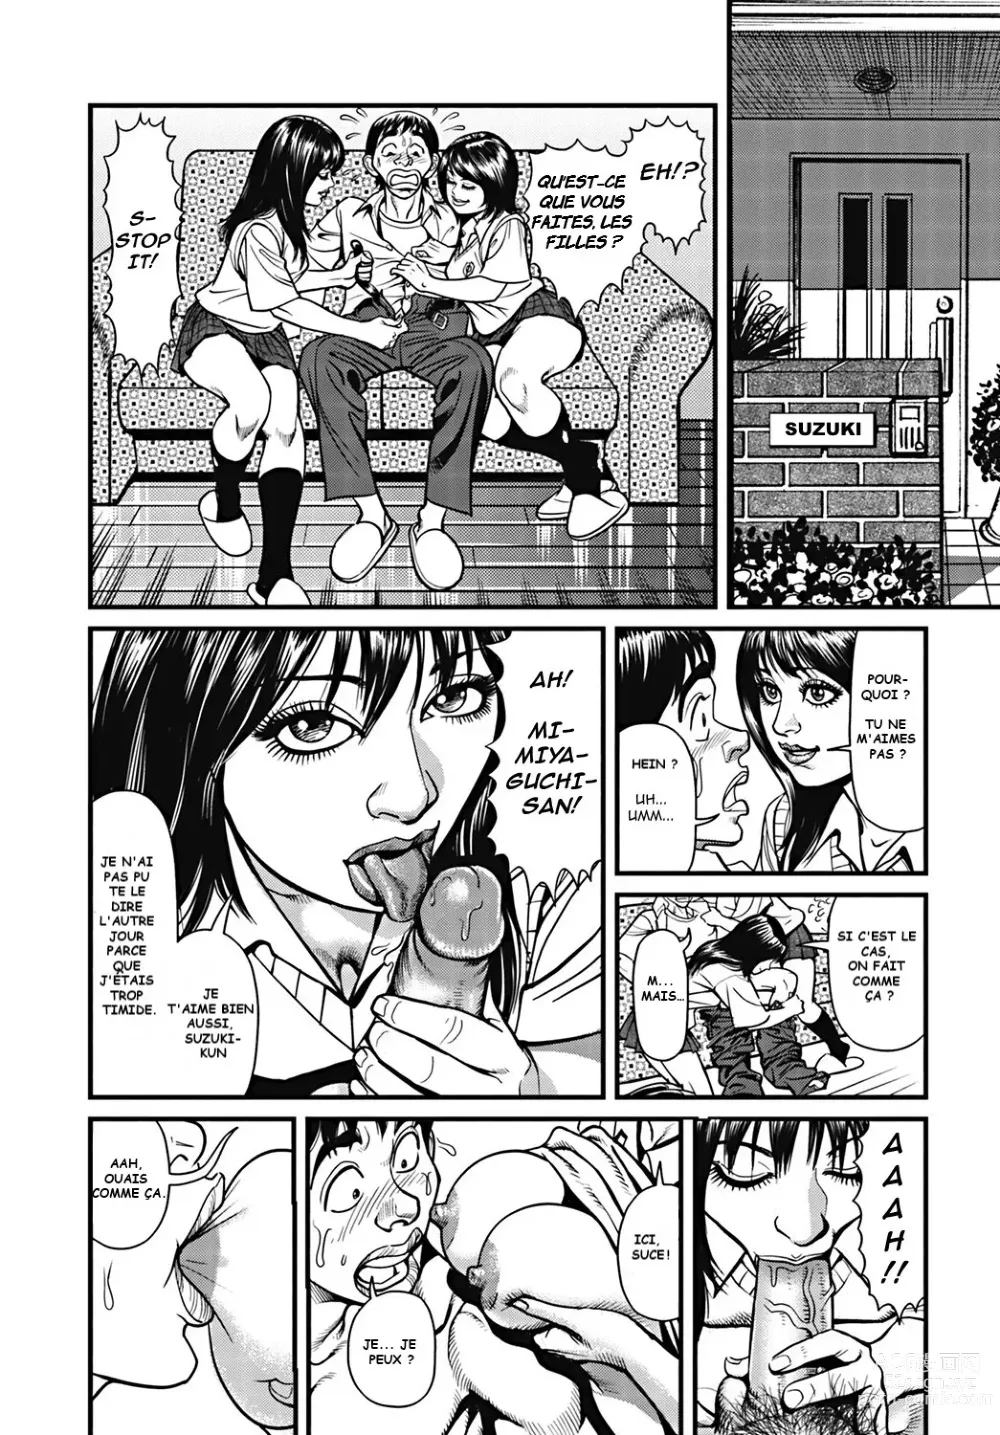 Page 4 of manga Lady Teacher Story